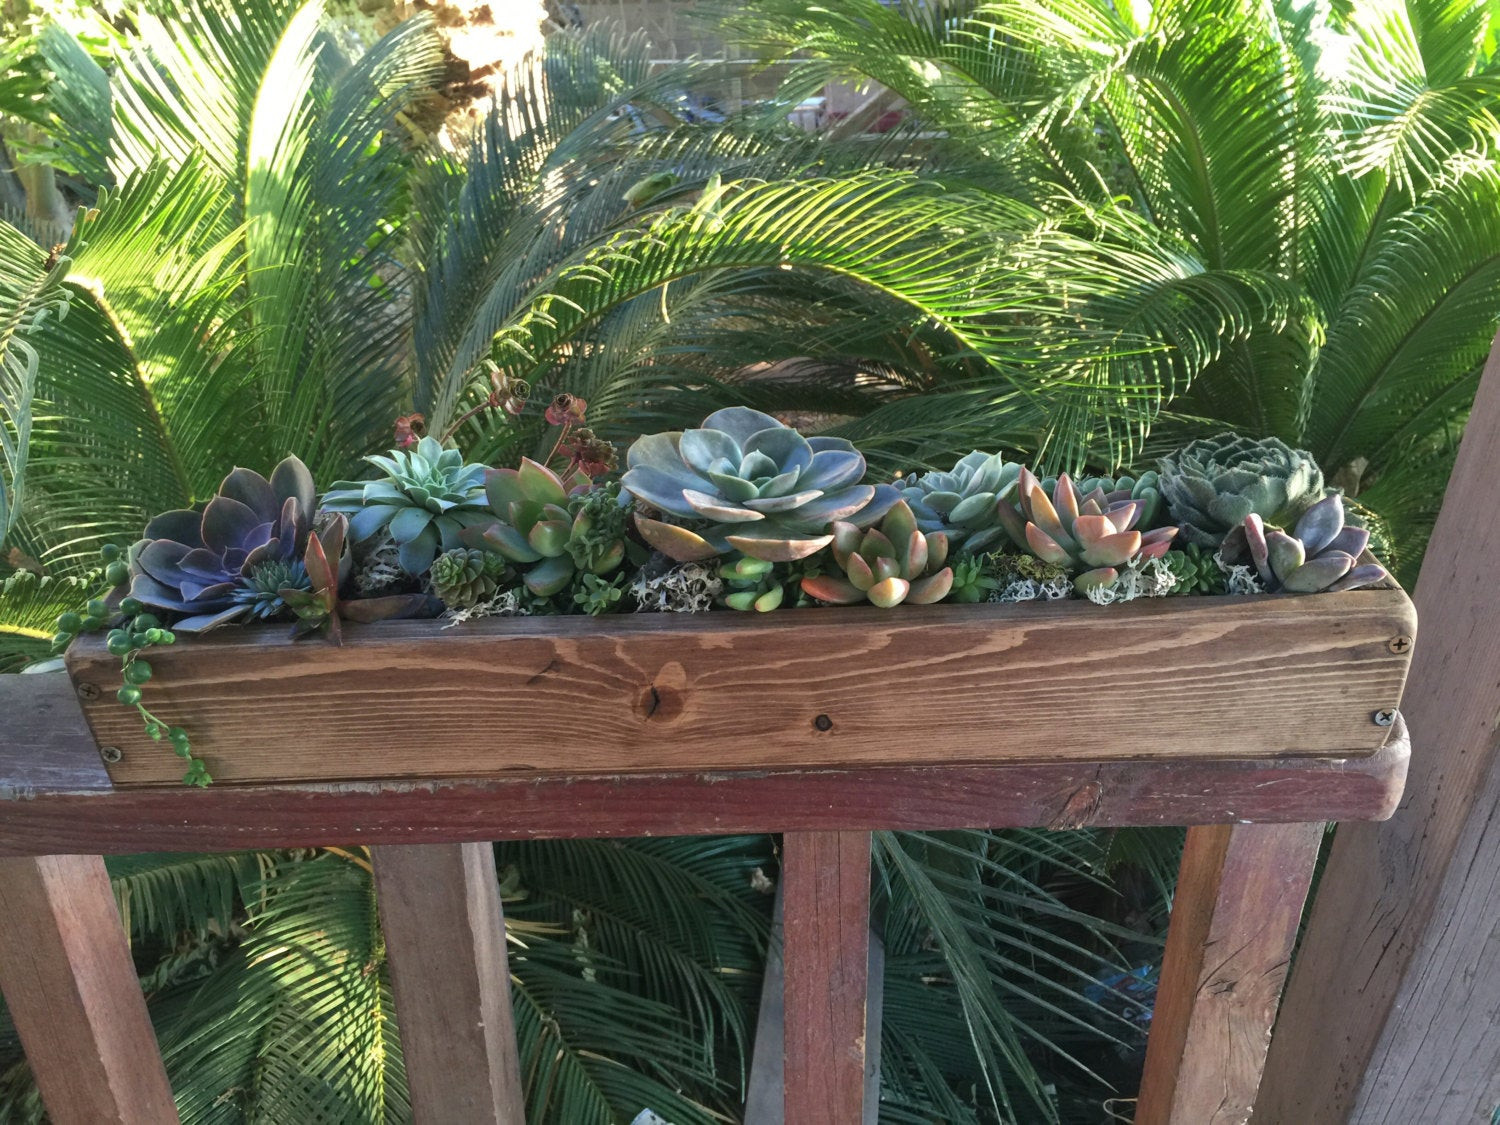 Best ideas about Succulent Planter Box
. Save or Pin Succulent arrangement in long Rustic wood planter box Now.